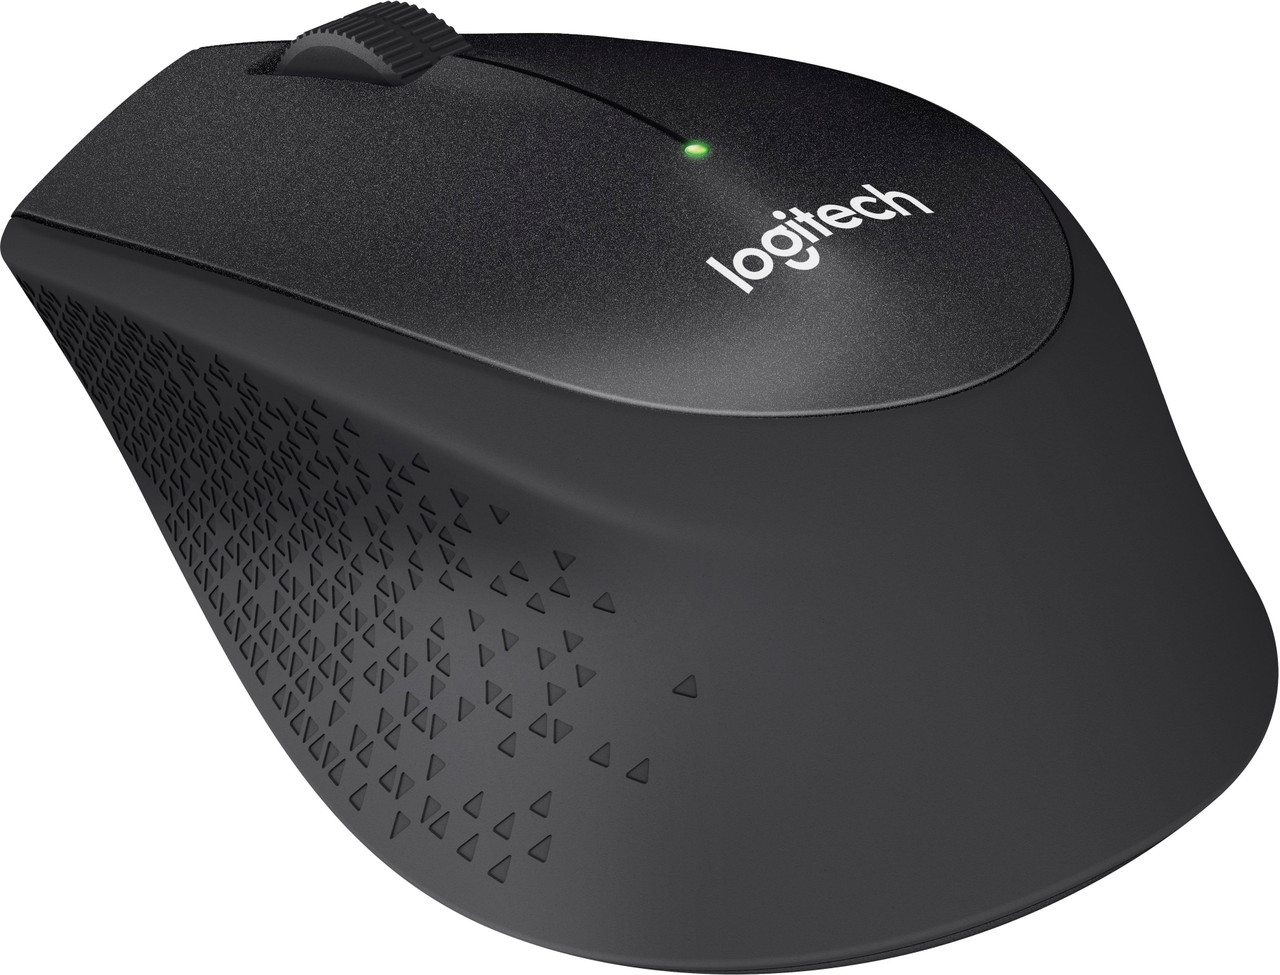 Logitech - Wireless Optical Mouse - Black